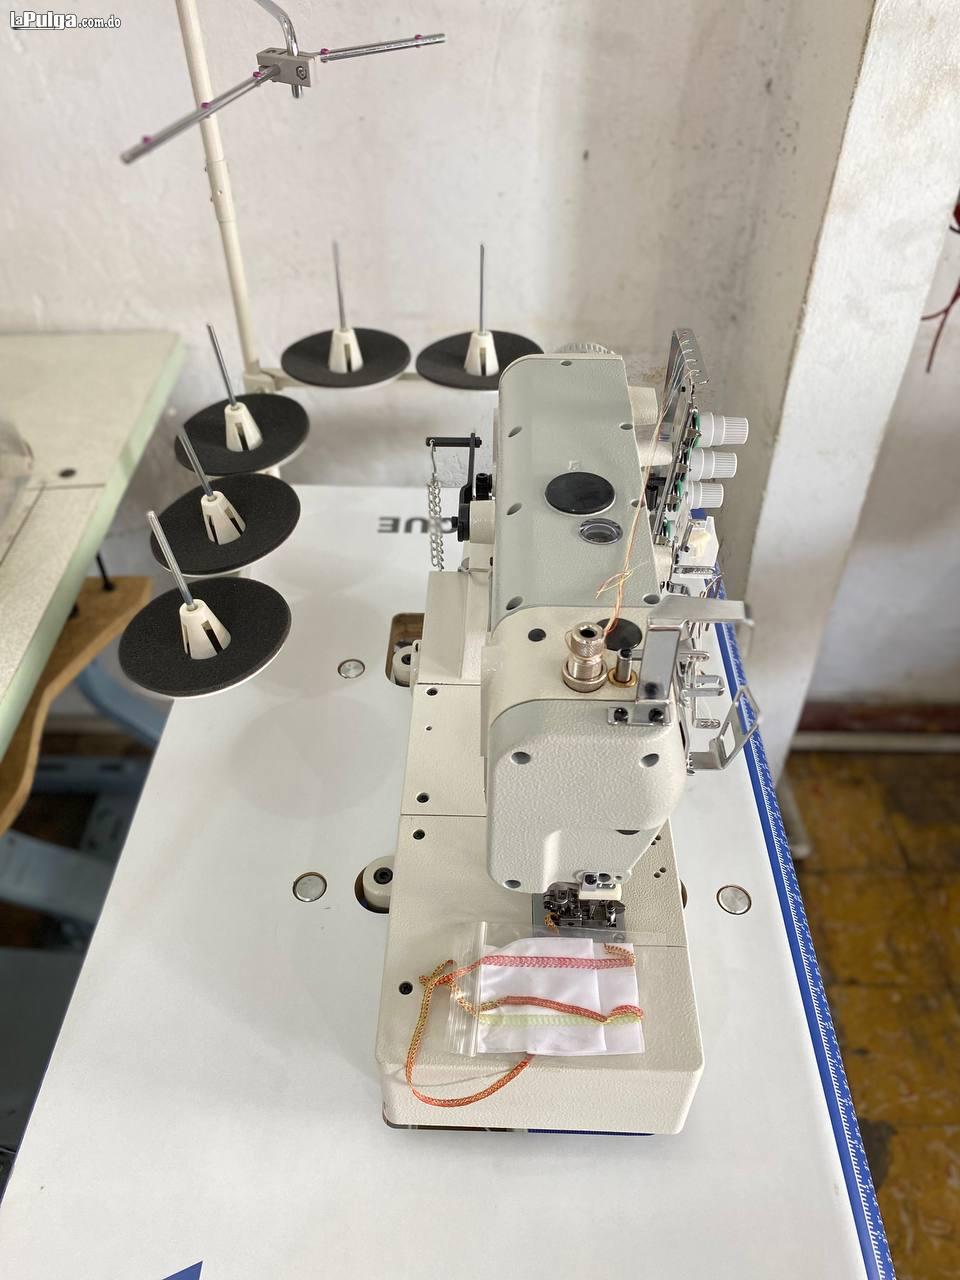 maquina de coser industrial full cover pegasus W500 interlock Nueva Foto 7142518-2.jpg